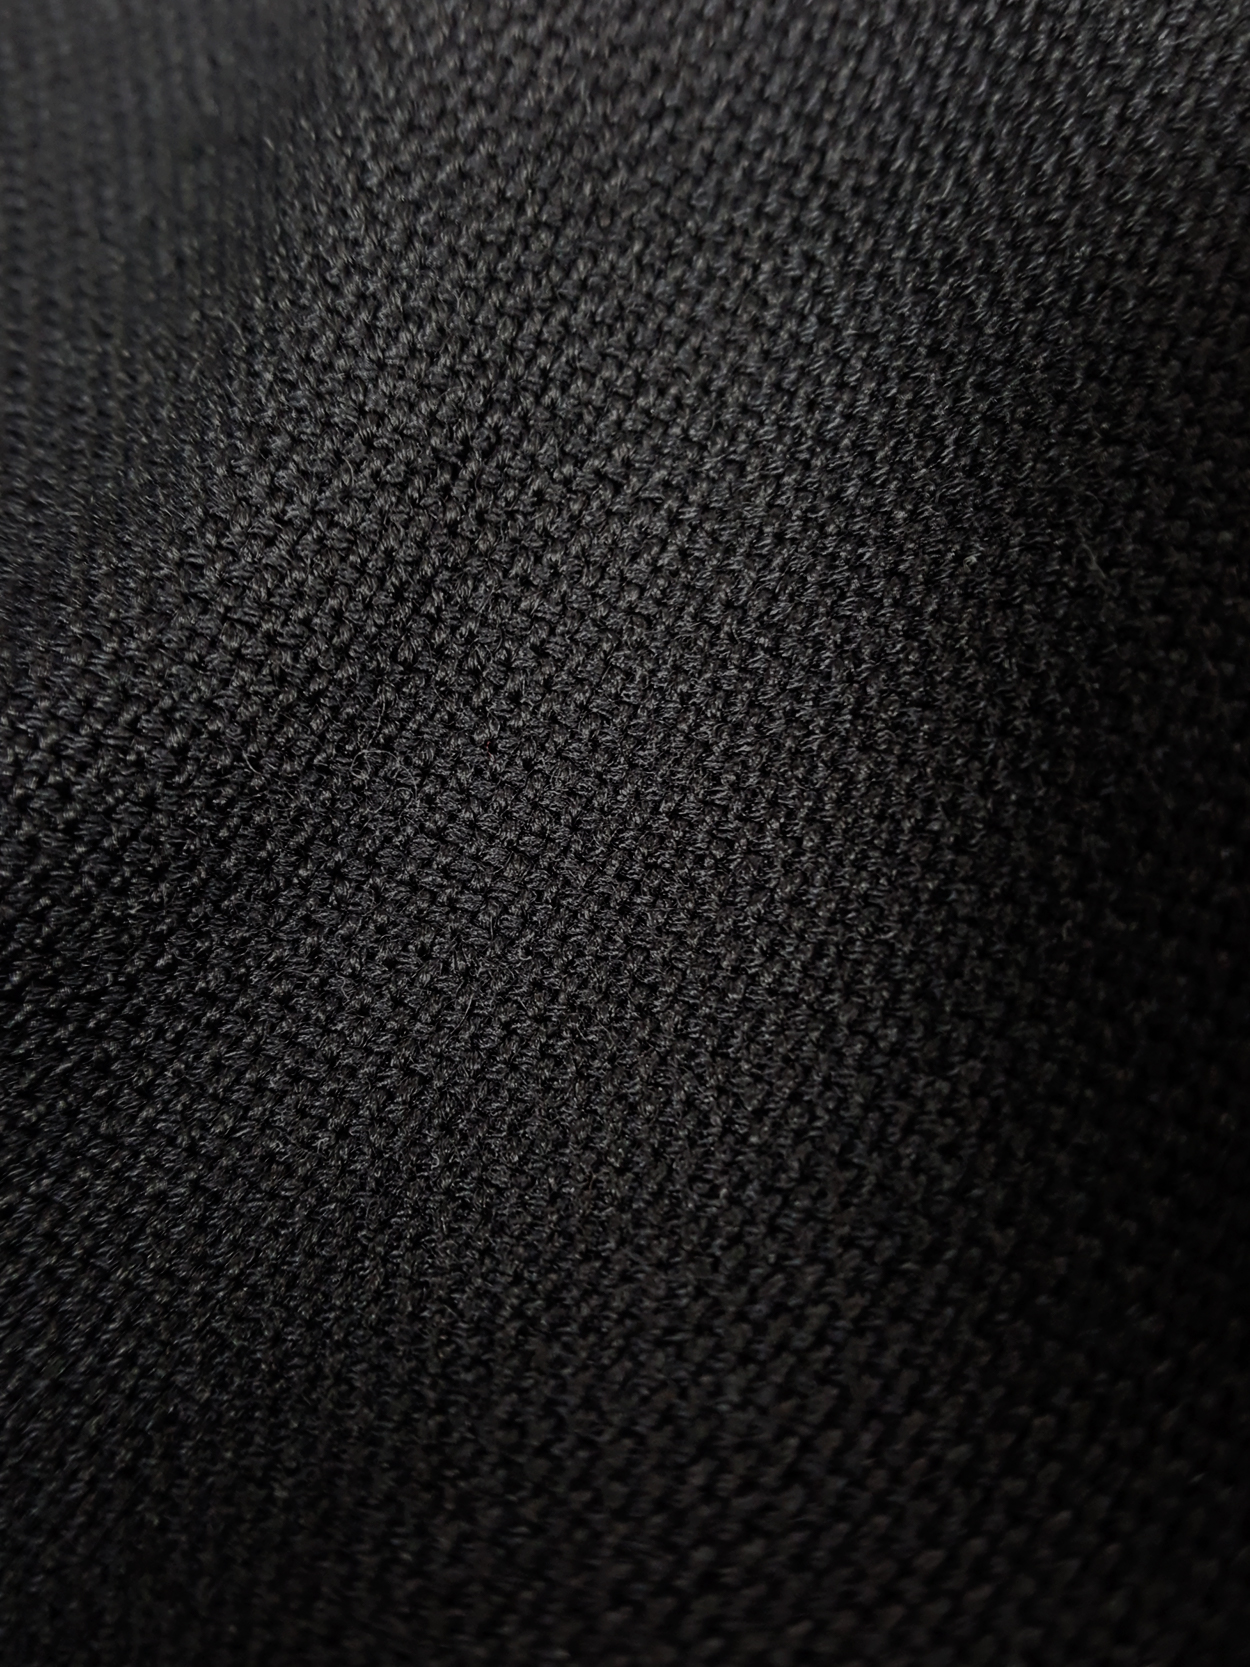 Ann Demeulemeester black tunic with deep v-neck — fall 2015 - V A N II ...